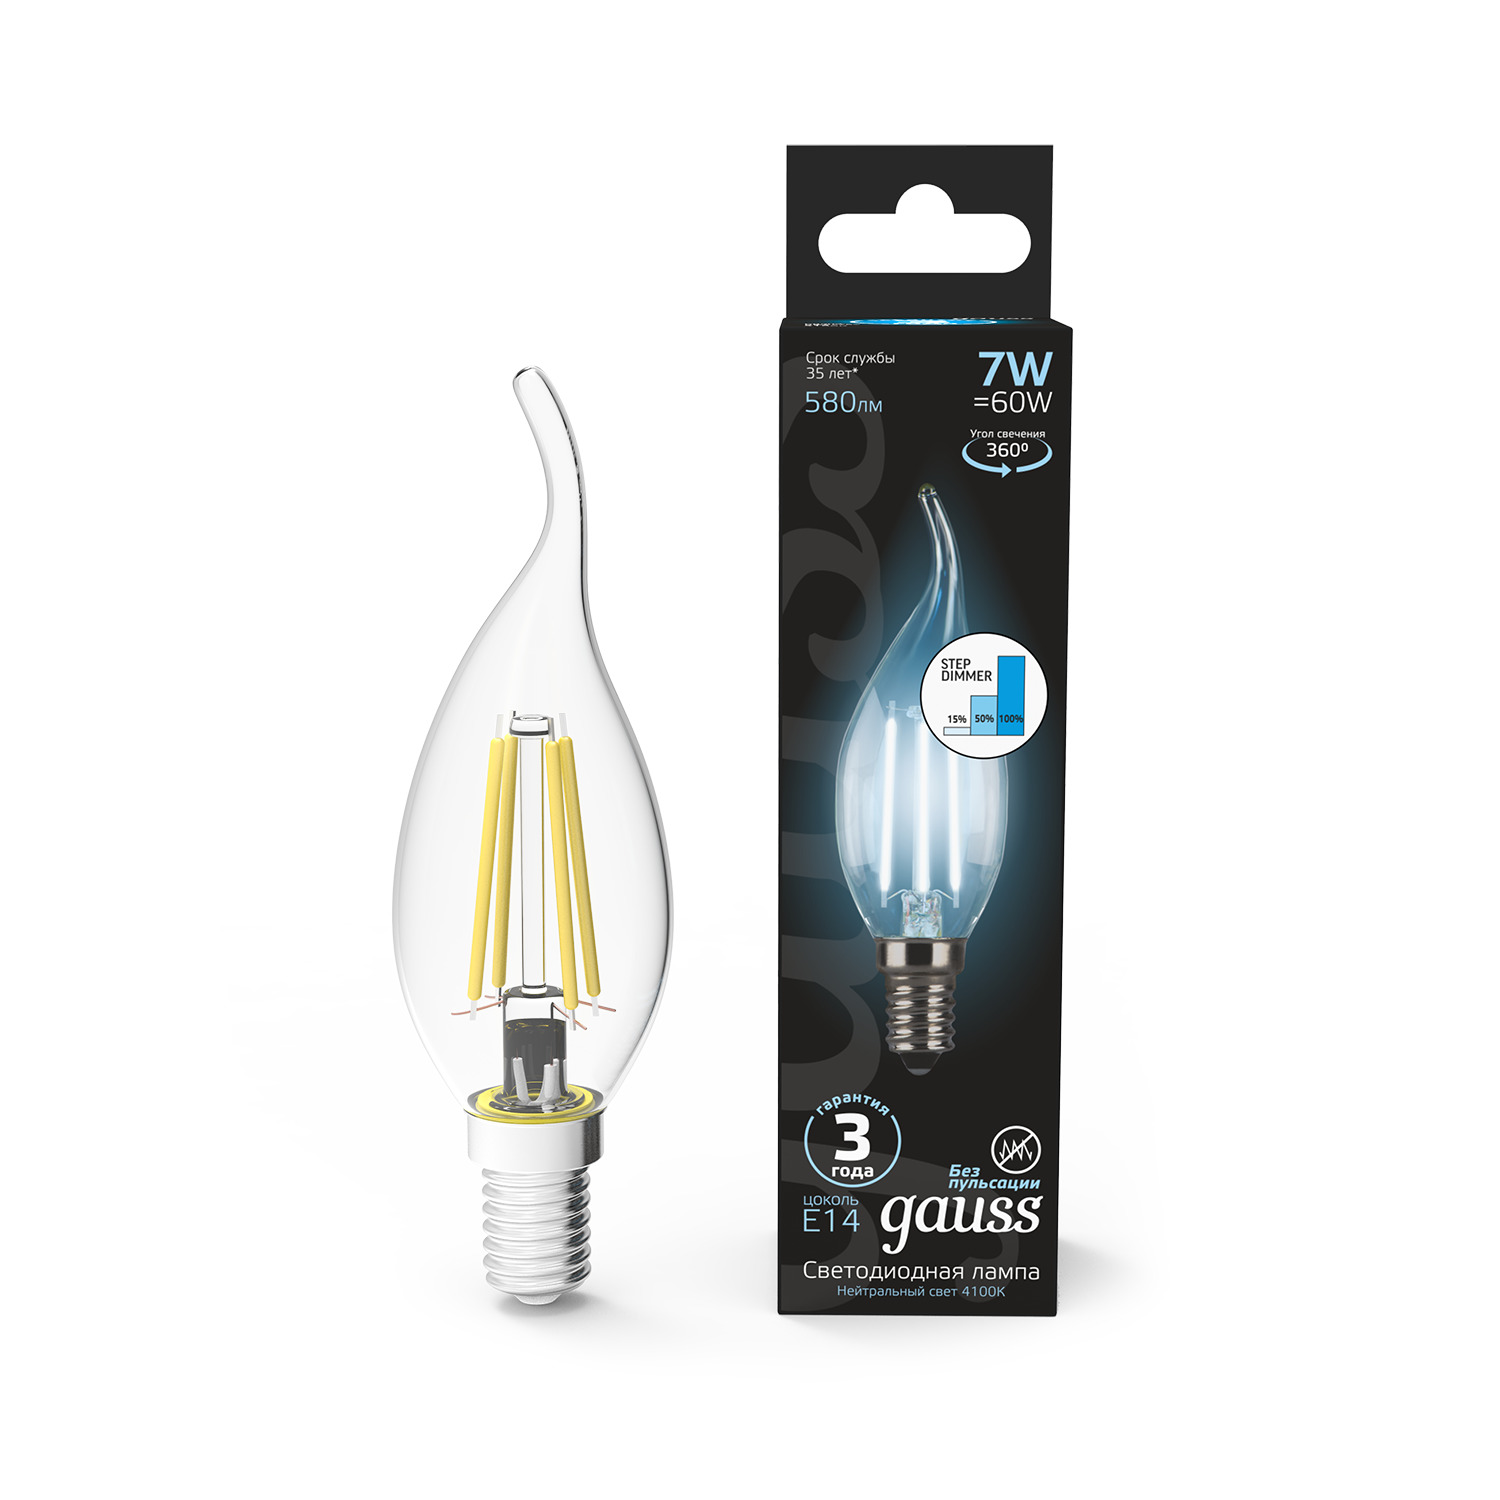 лампа gauss led filament свеча на ветру dimmable e14 5w 420lm 2700k 1 10 50 Лампа Gauss LED Filament Свеча на ветру E14 7W 580lm 4100K step dimmable 1/10/50